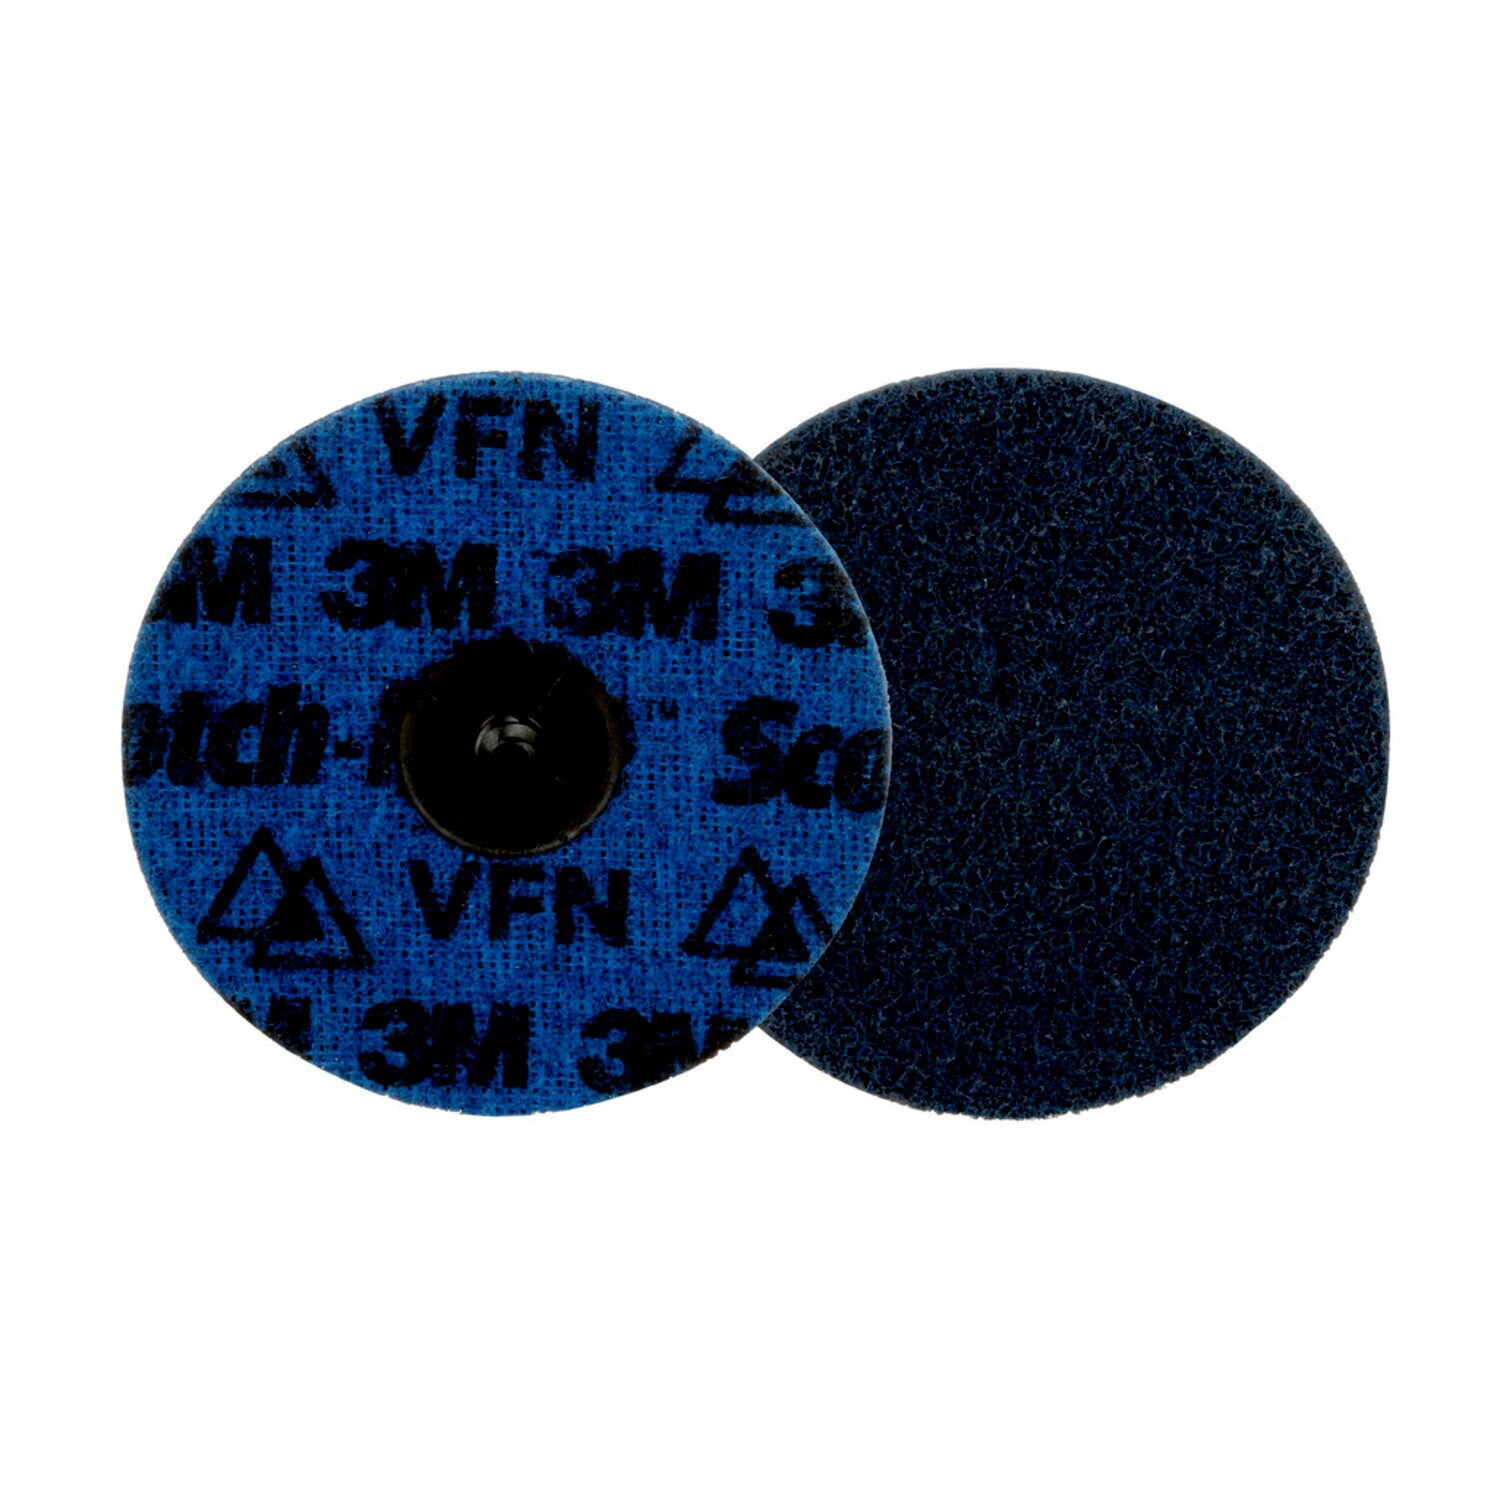 7100264199 - Scotch-Brite Roloc Precision Surface Conditioning Disc, PN-DR, Very
Fine, TR, 4 in, 25/Carton, 100 ea/Case, Dispenser Pack